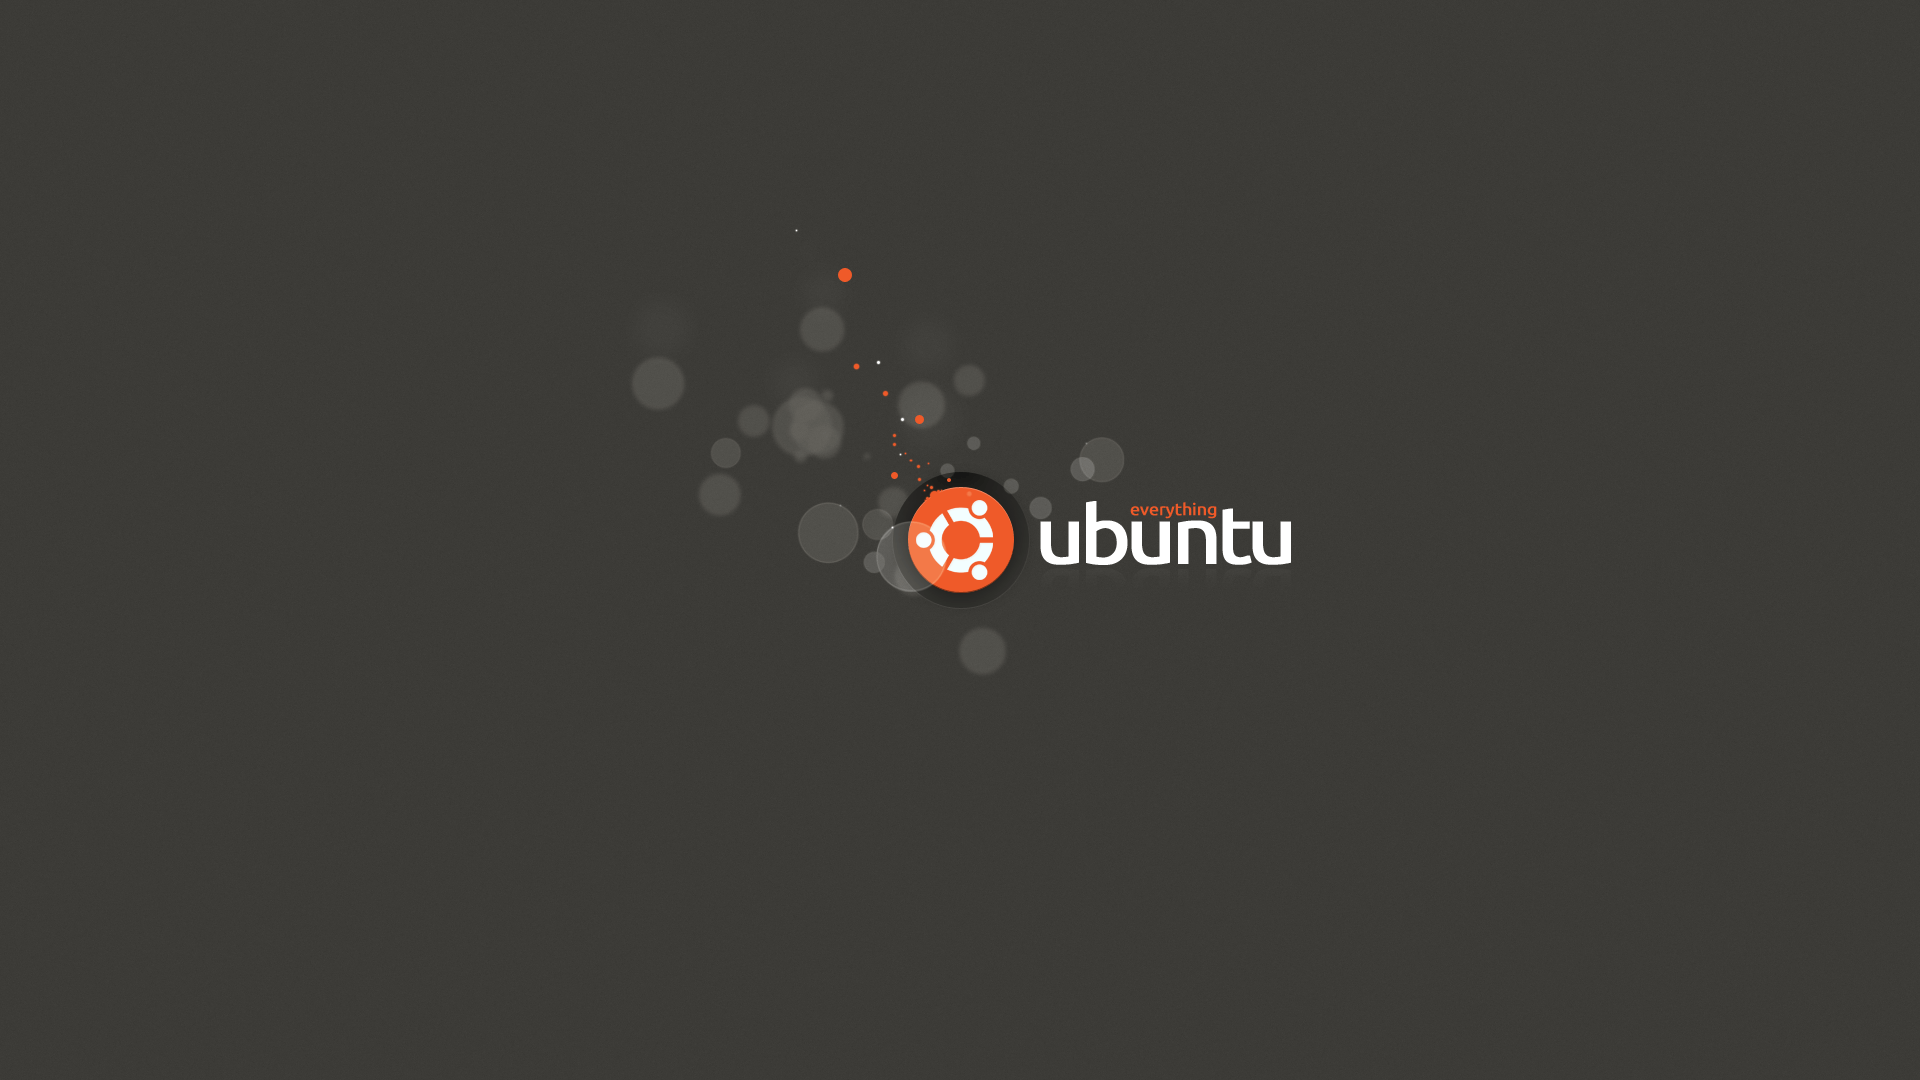 Free Ubuntu Wallpaper For Desktop and Laptops